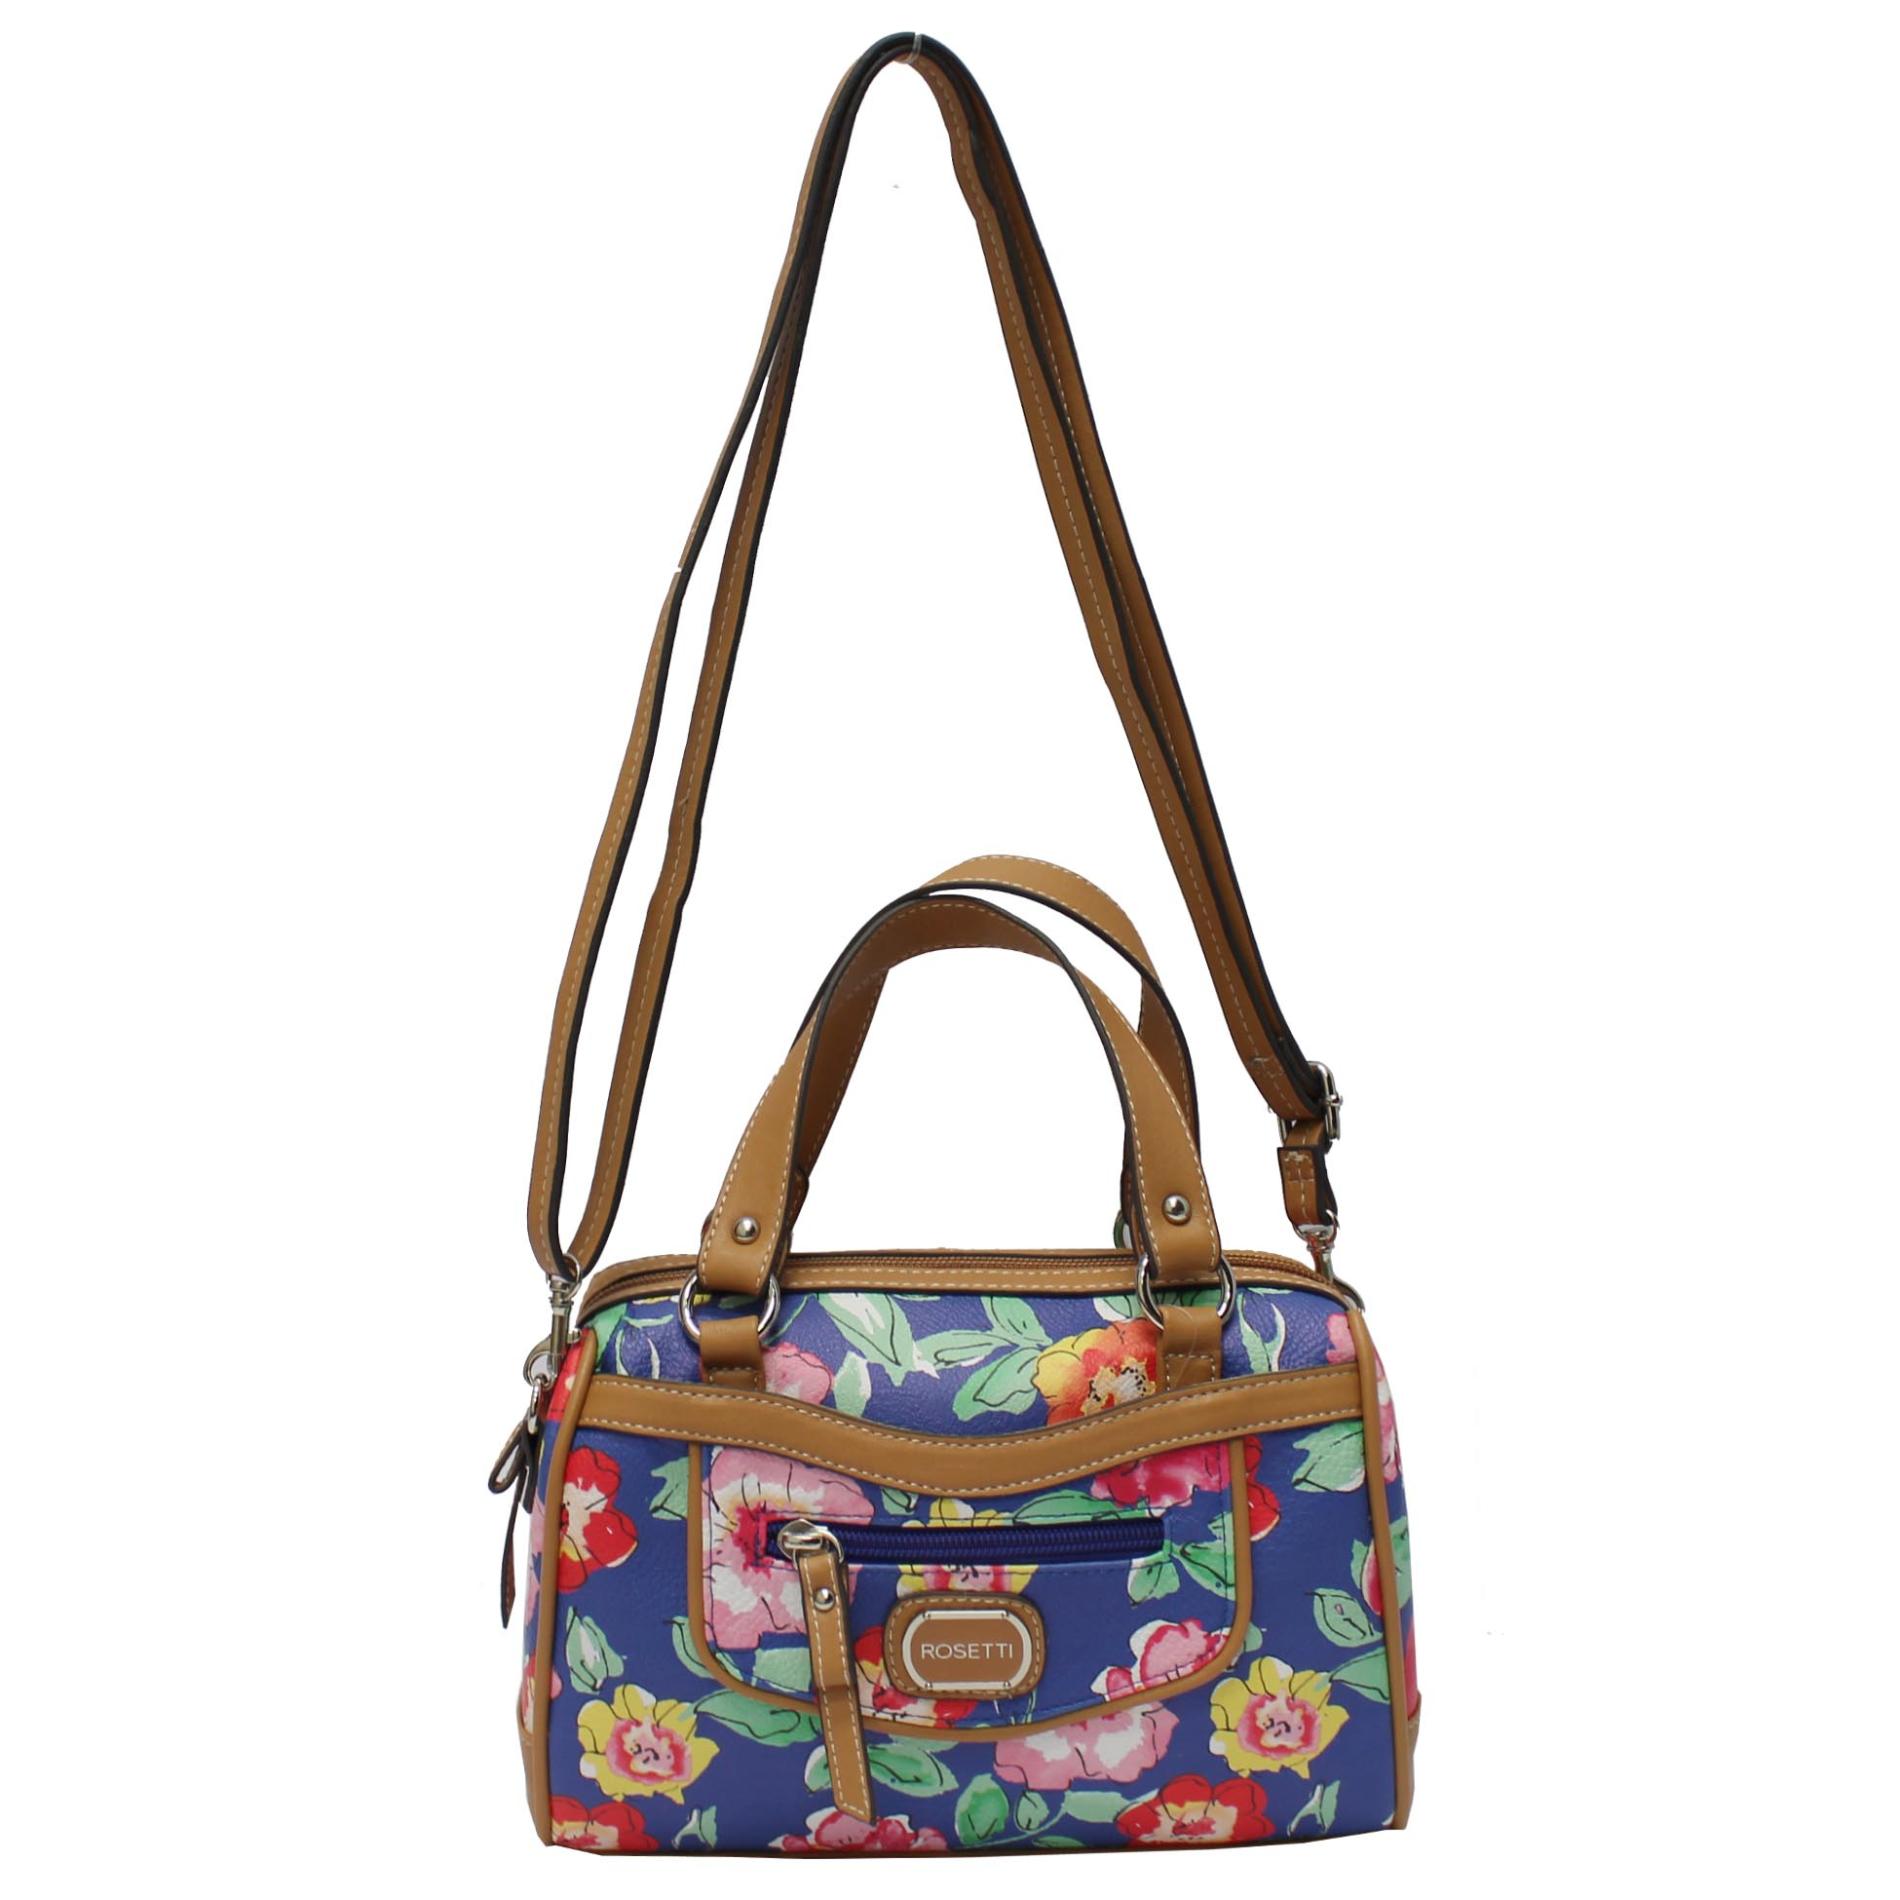 Rosetti Women's Small Sensation Crossbody Bag - Floral